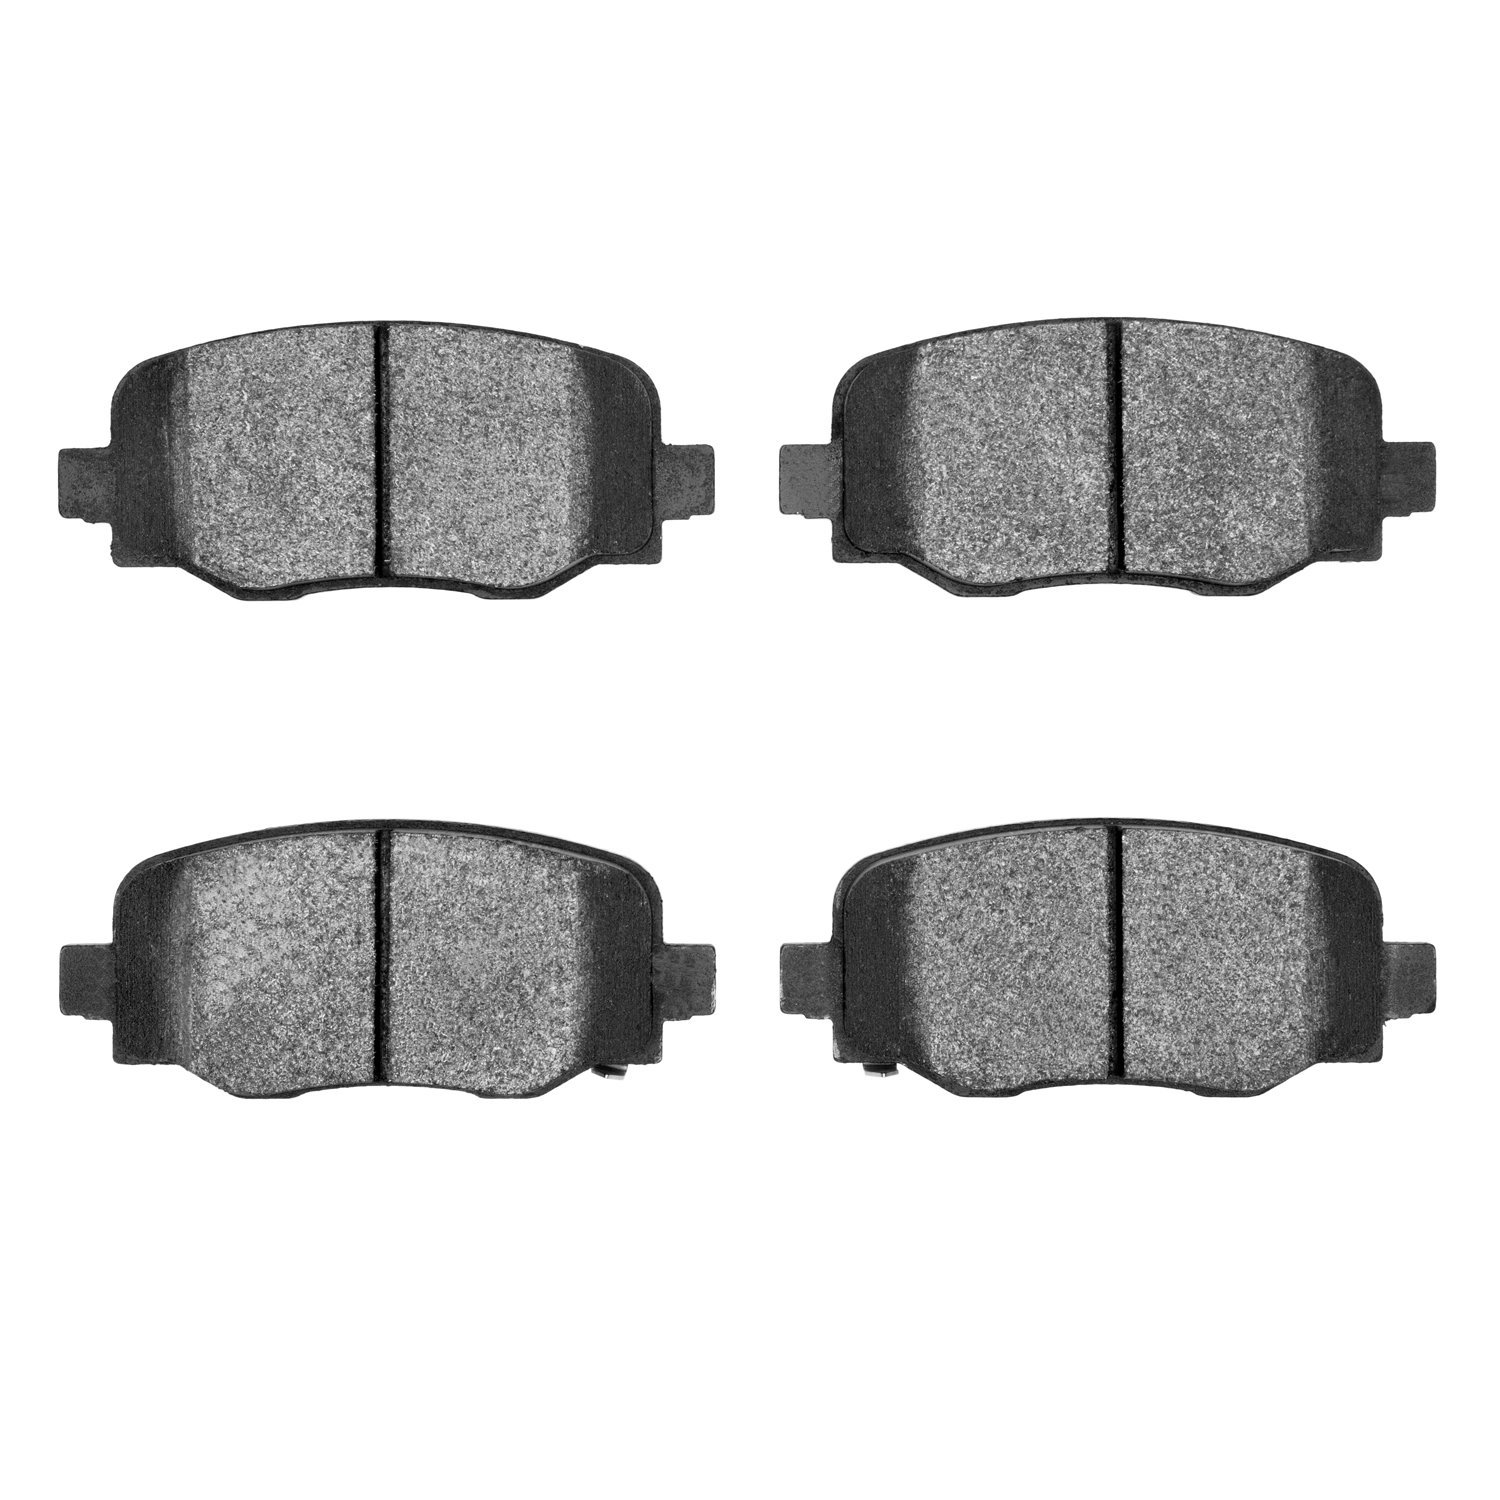 1310-1809-00 3000-Series Ceramic Brake Pads, Fits Select Mopar, Position: Rear